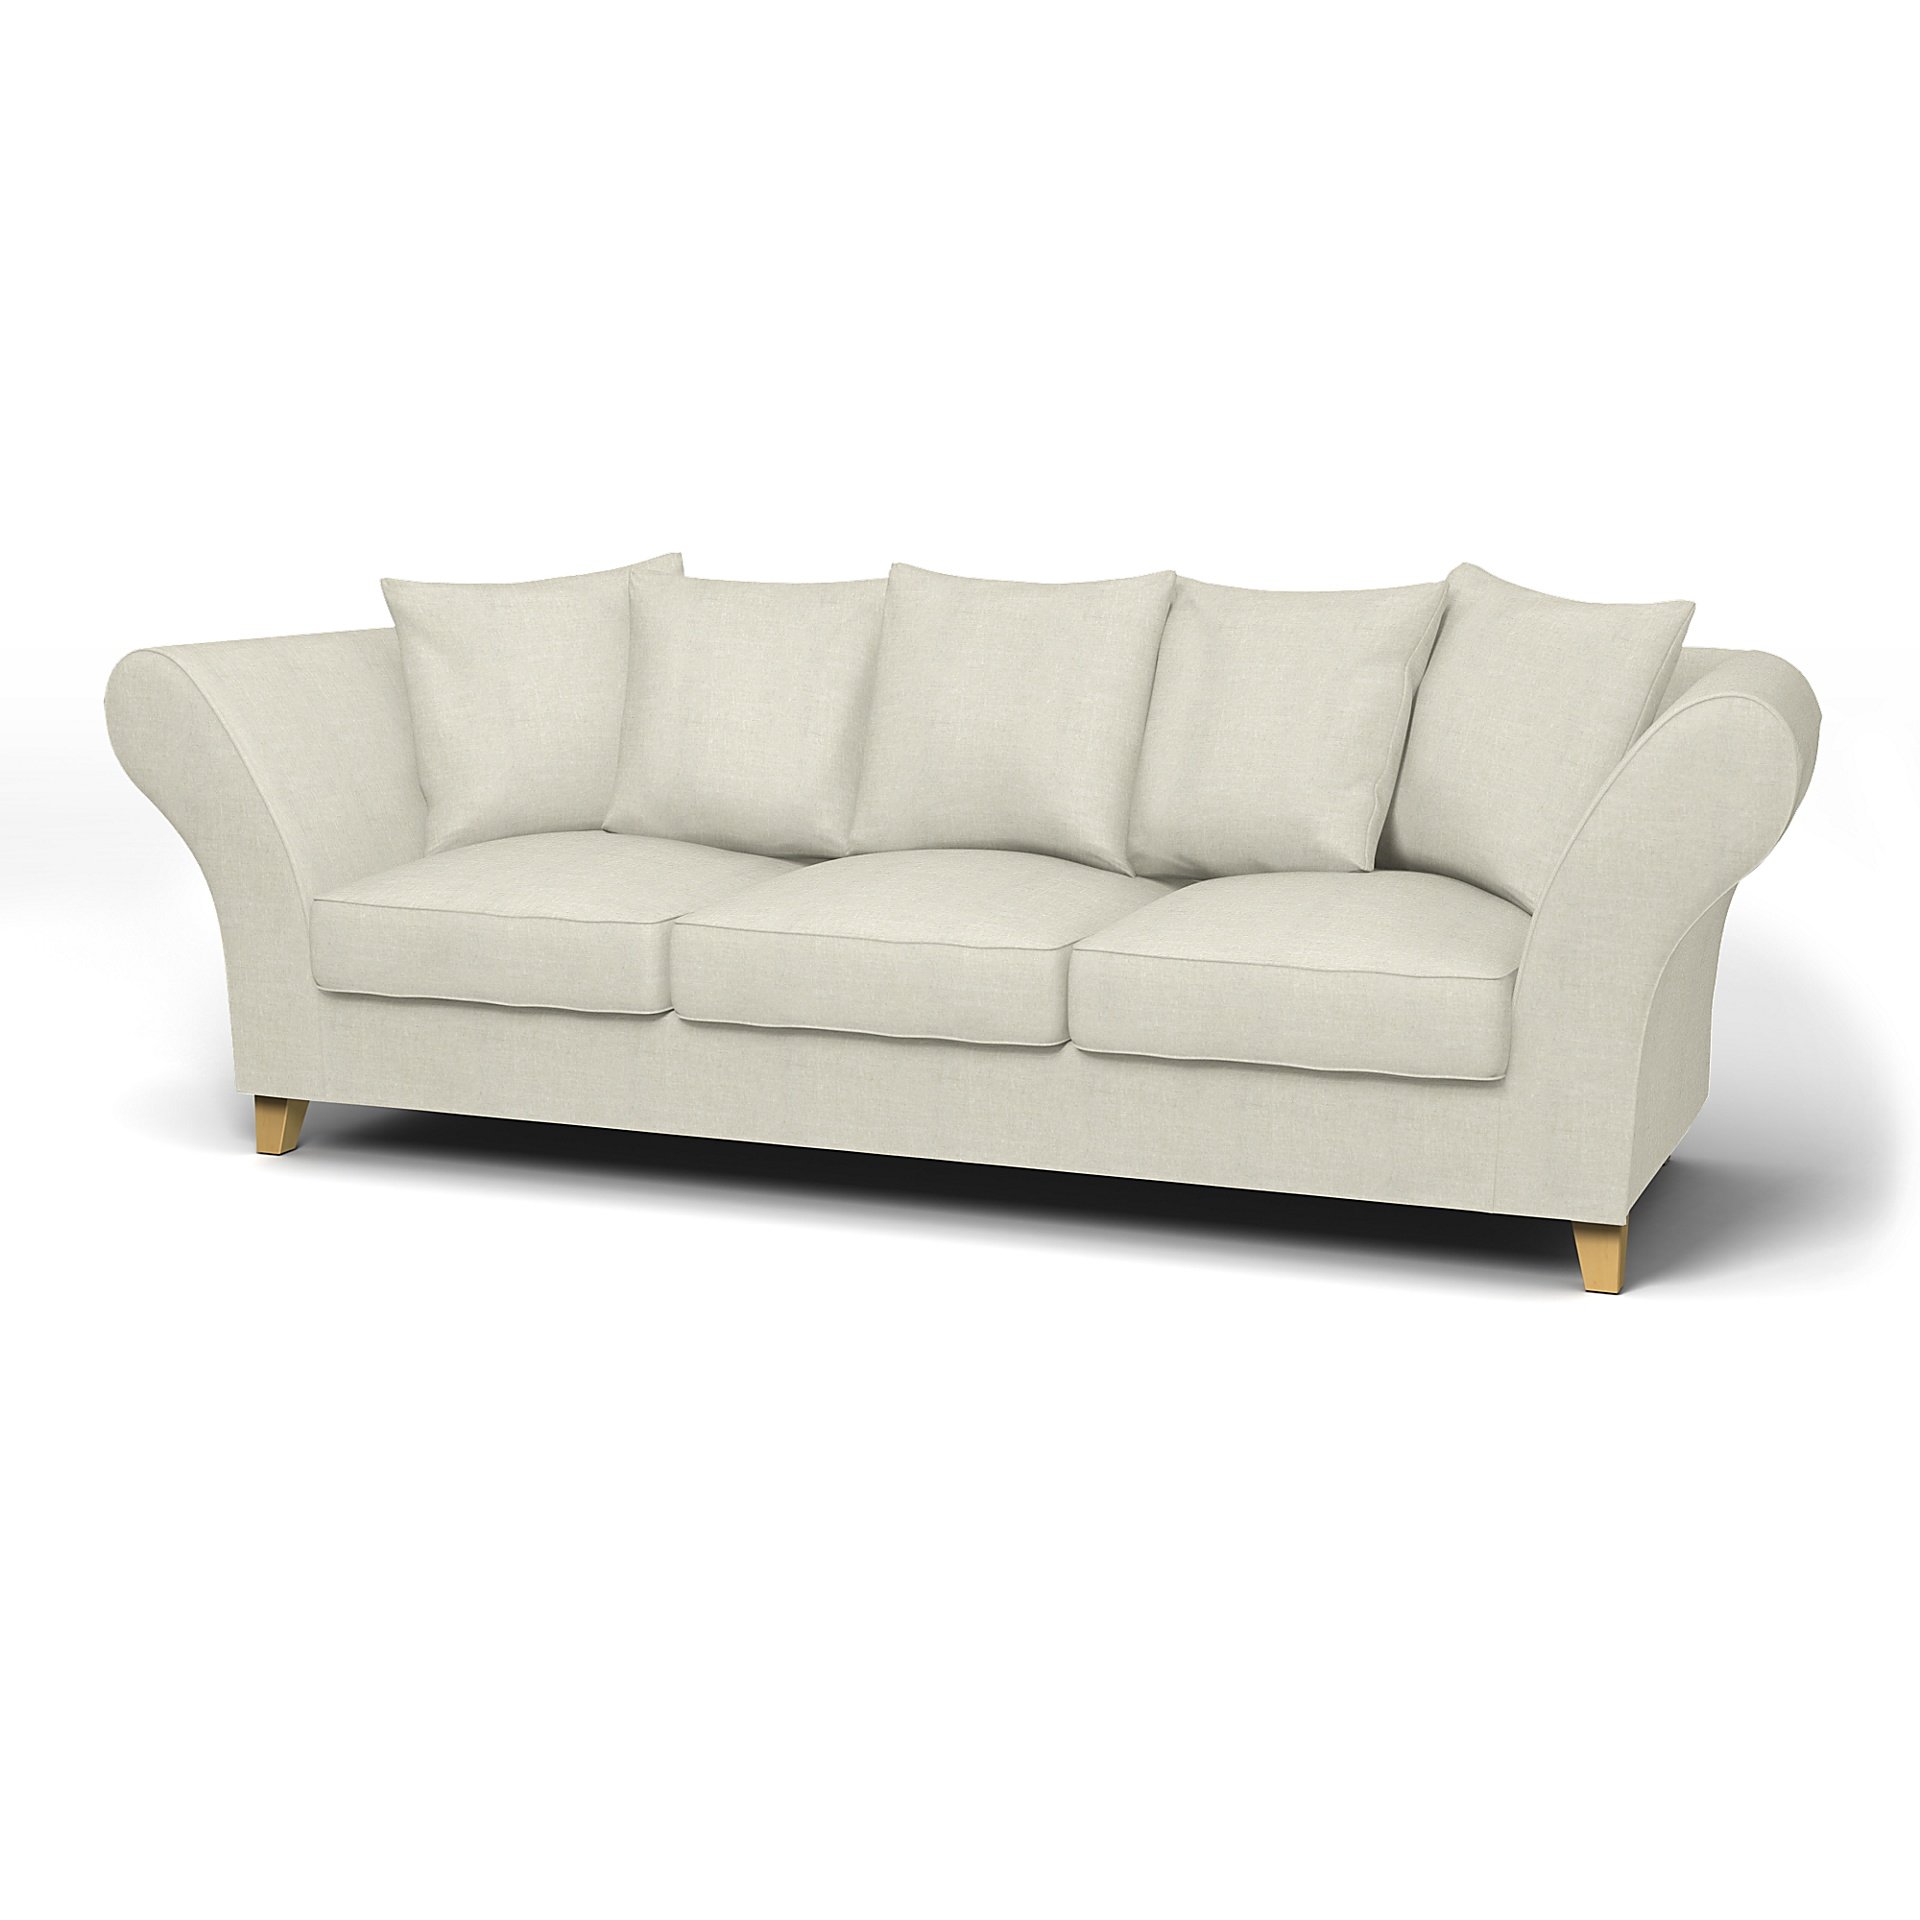 IKEA - Backa 3.5 Seater Sofa Cover, Natural, Linen - Bemz